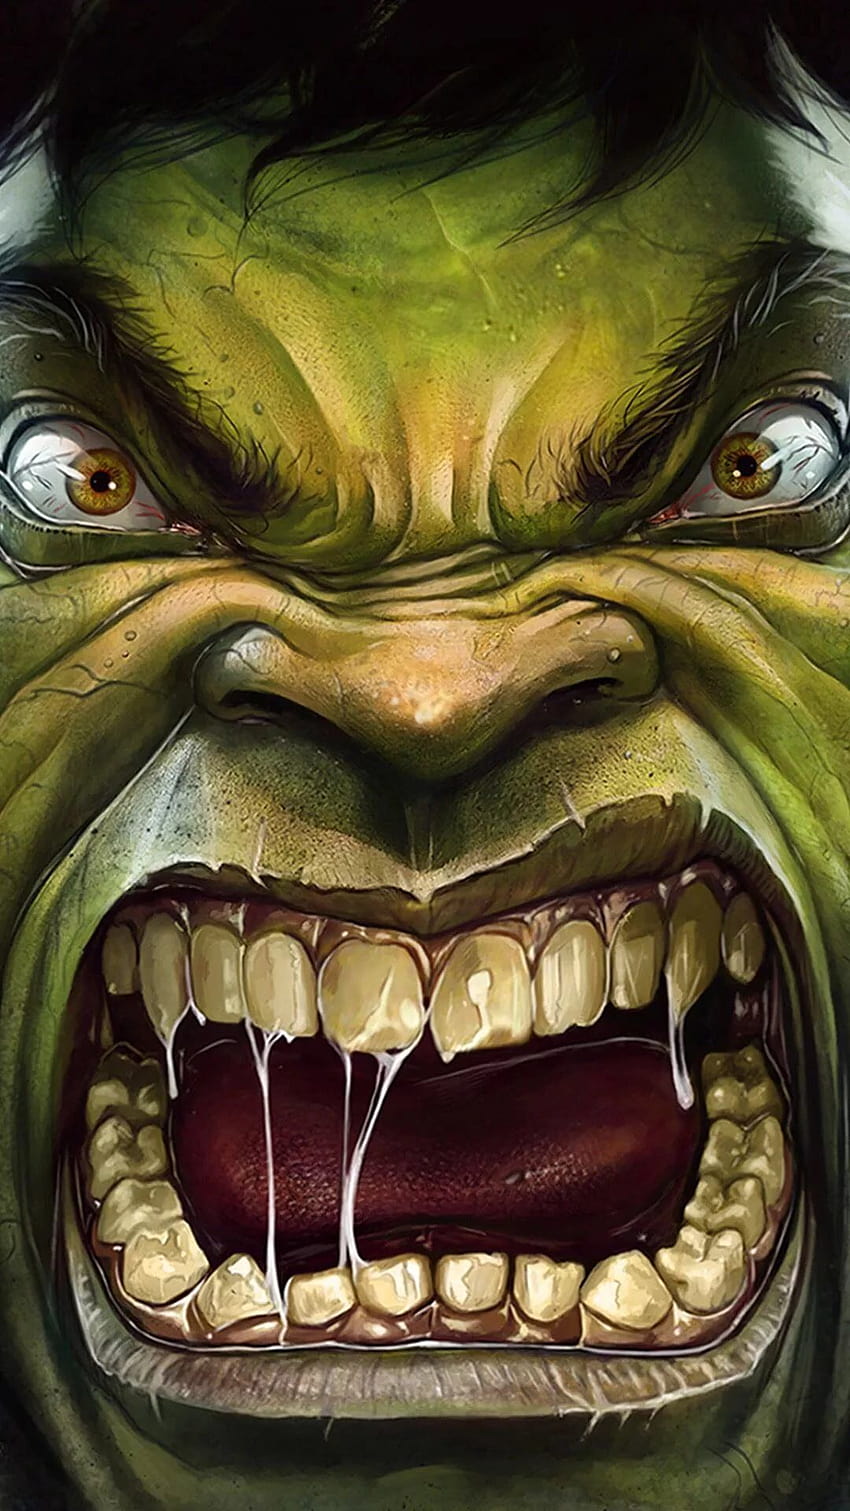 Incredible Hulk Wallpaper Free Download - Colaboratory-thanhphatduhoc.com.vn